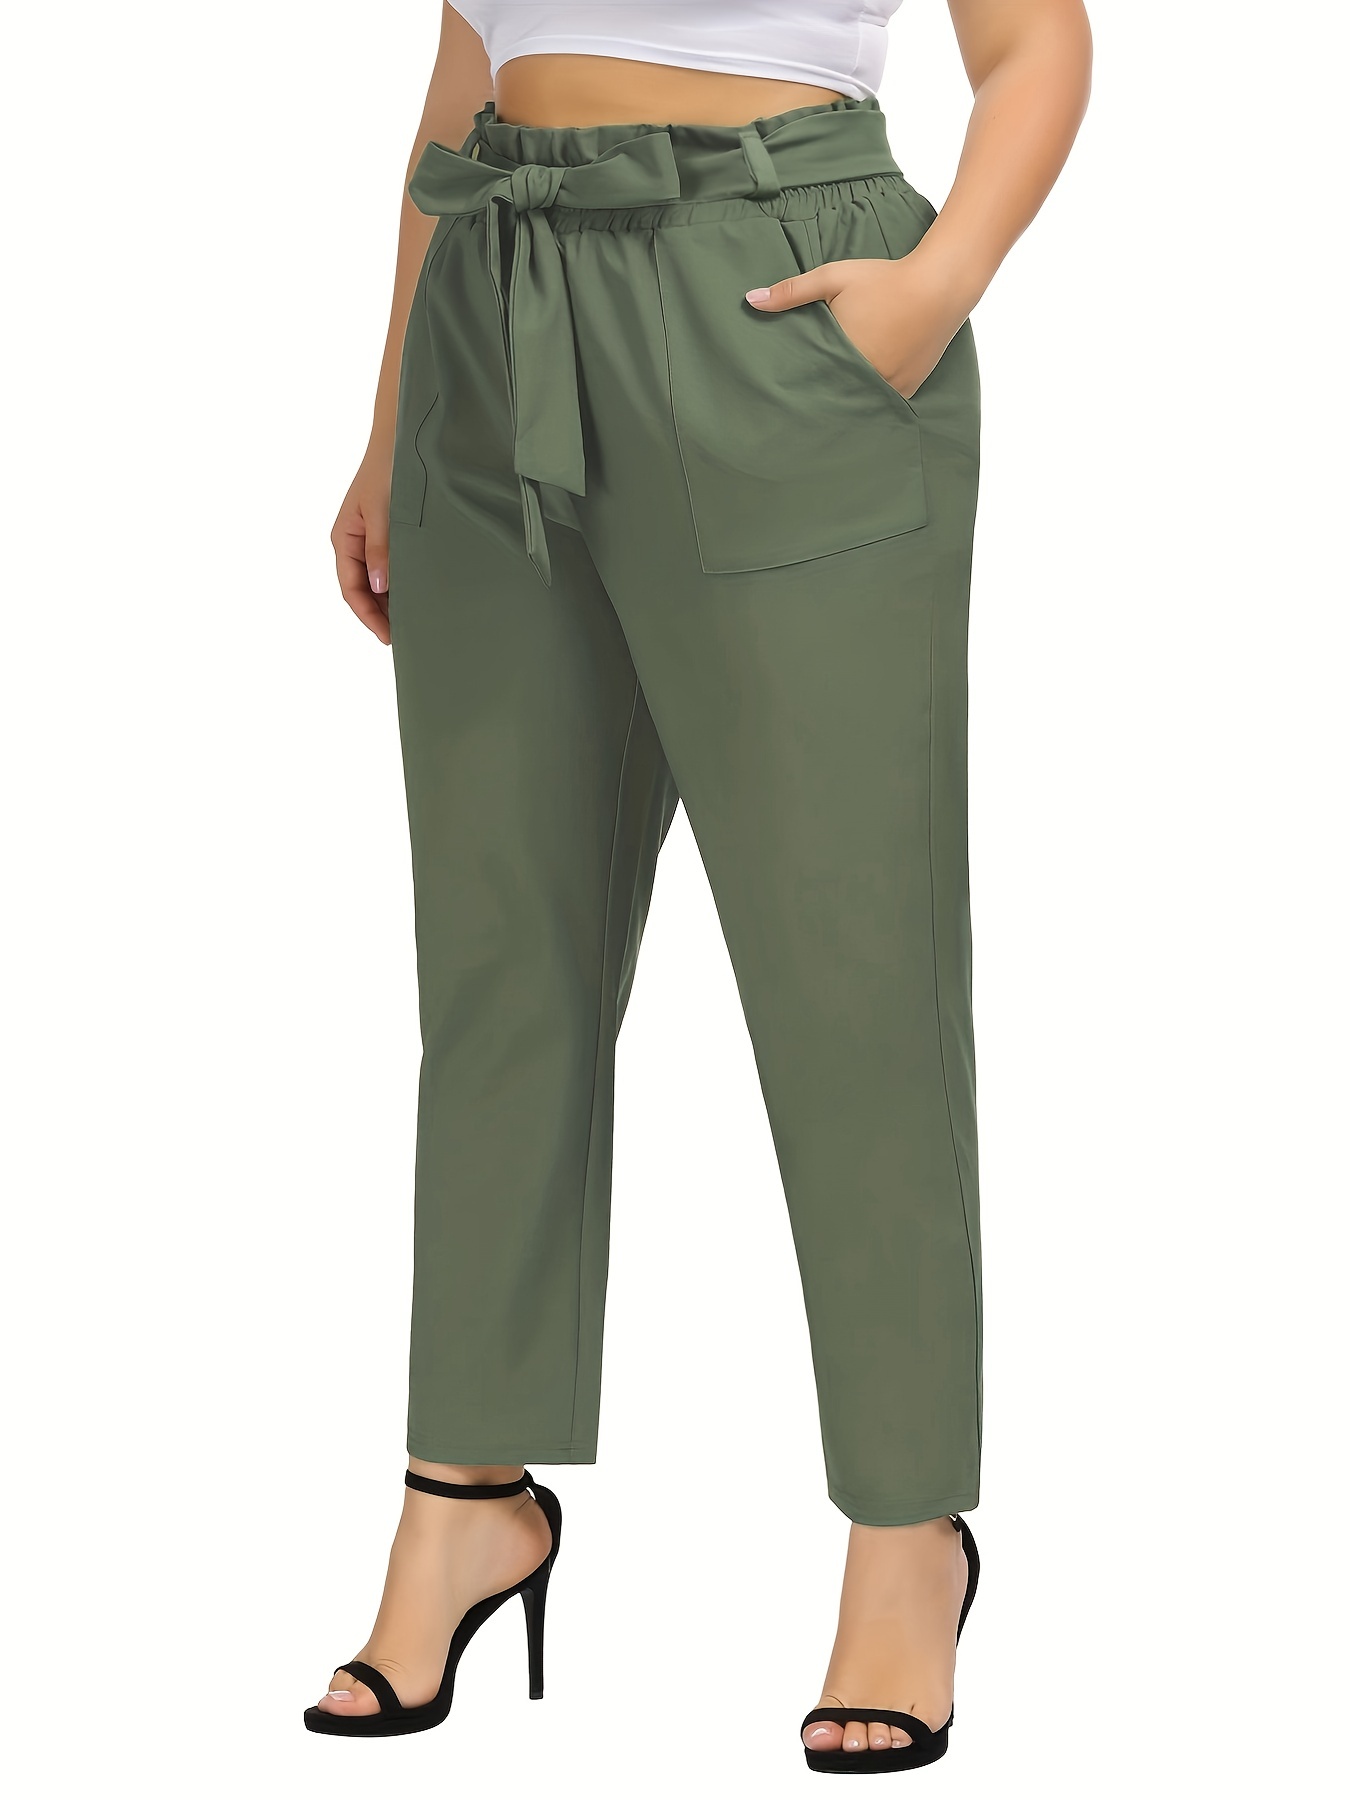 Green Paper Bag Elastic Waistband Casual Pants  Green pants outfit, Pants  outfit casual, Women pants casual